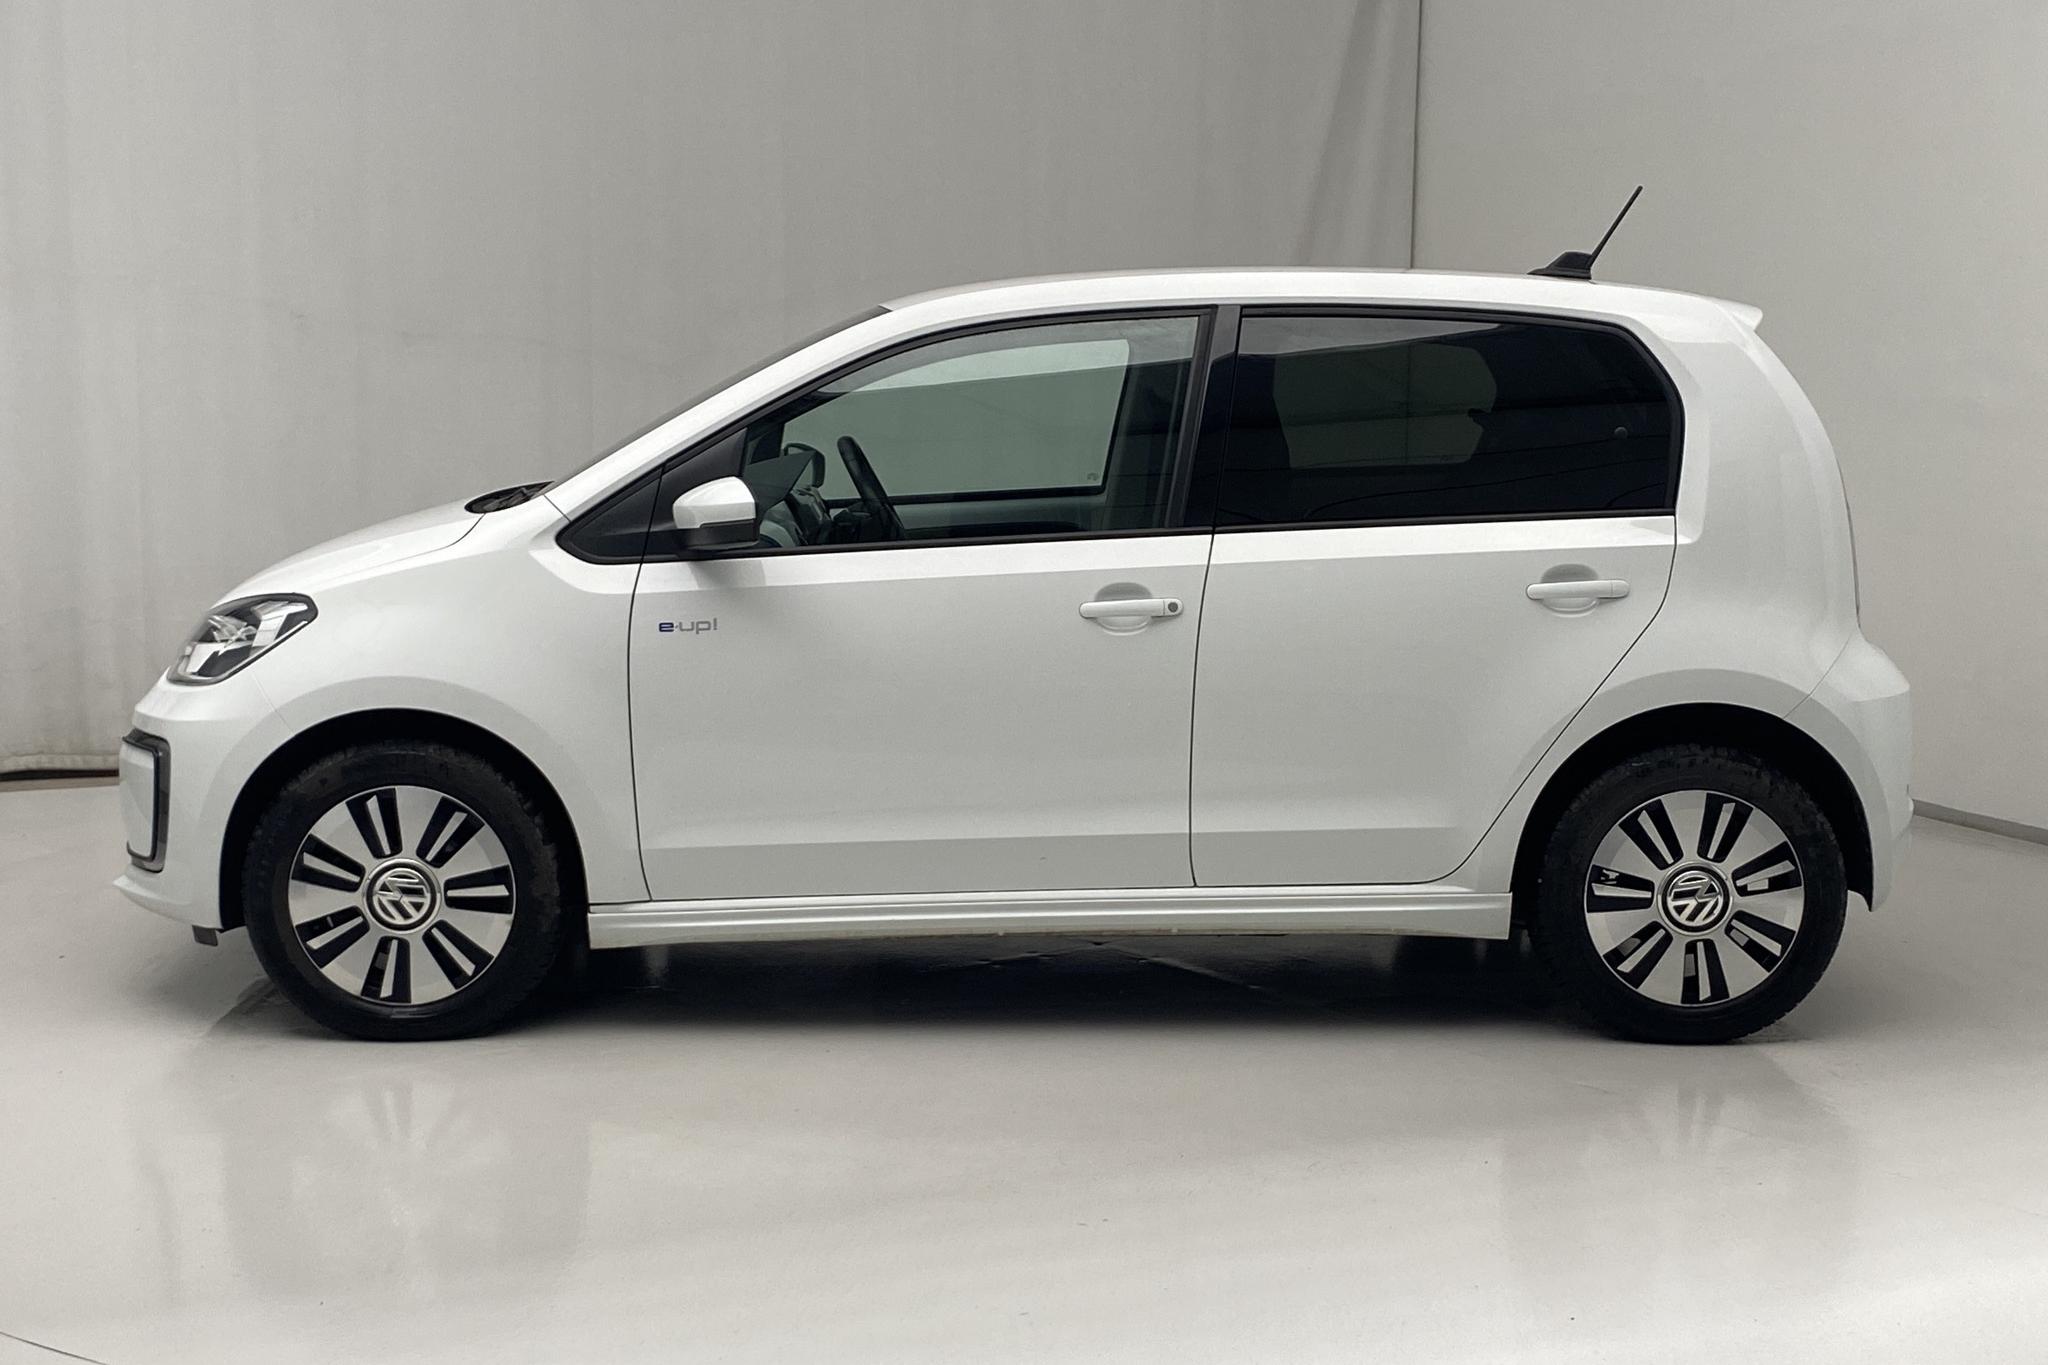 VW e-up! (83hk) - 23 520 km - Automatic - white - 2018